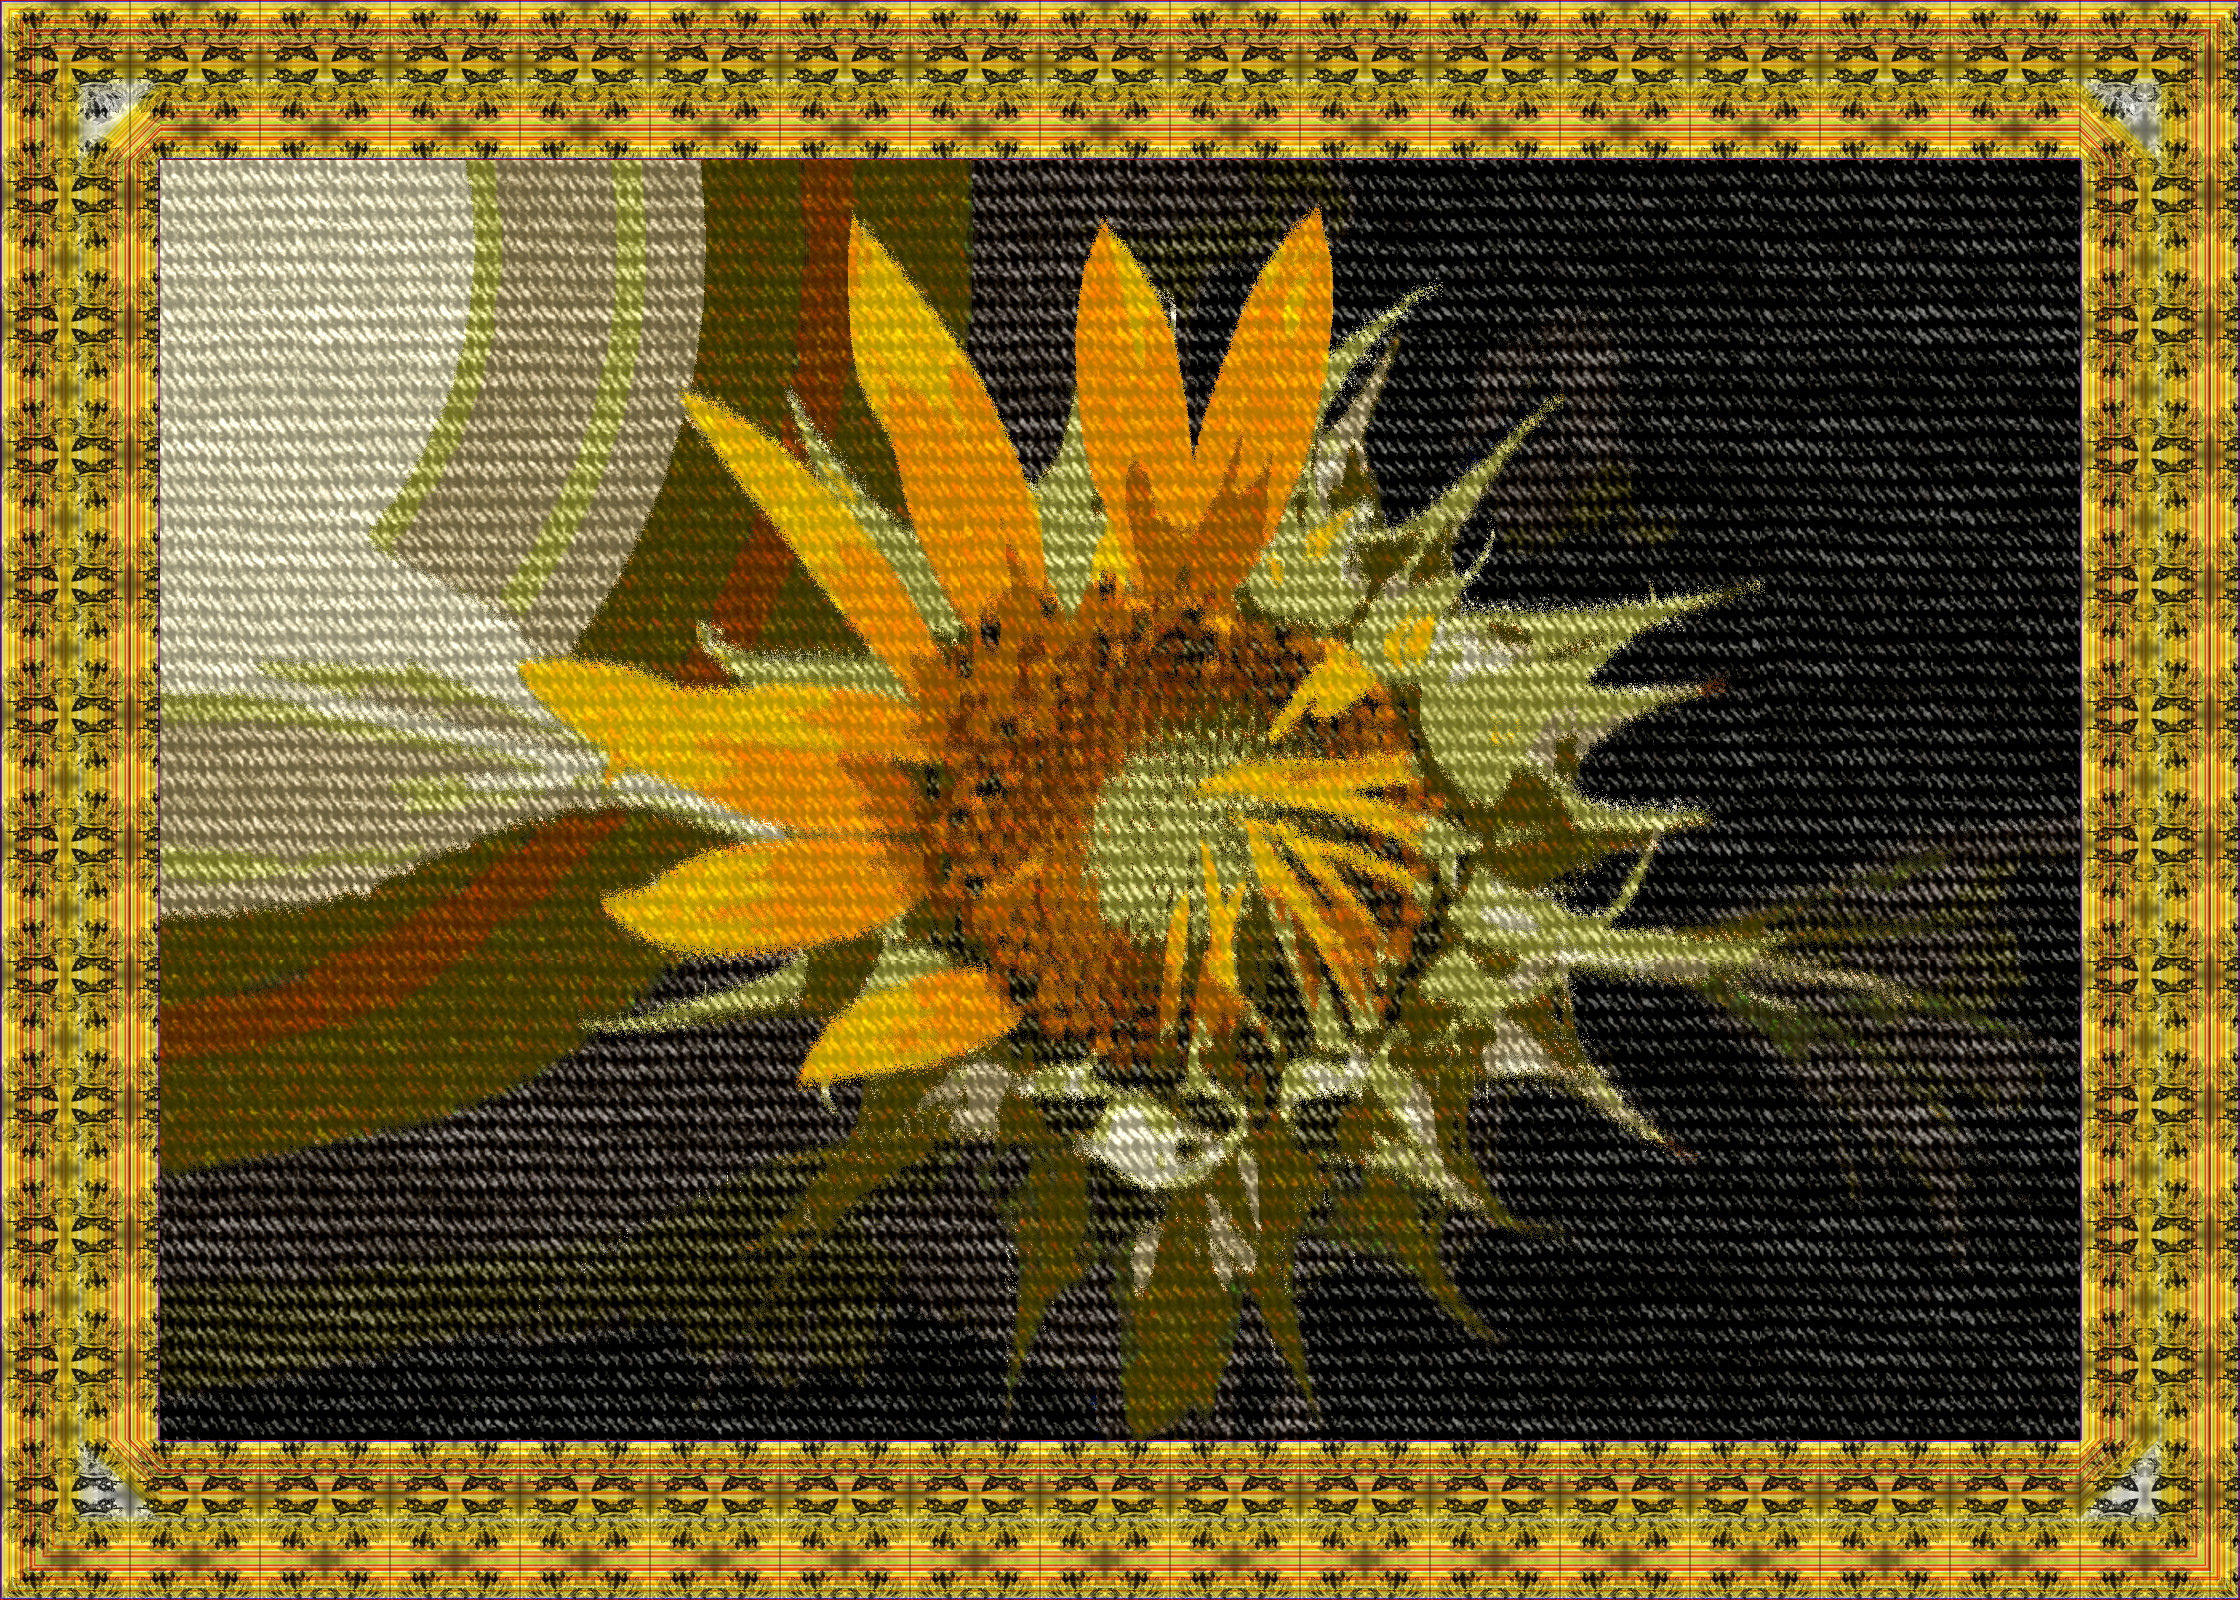 2019-06-01 18-27-02 sunflower-3113318_1920_stitchery (framed).jpg